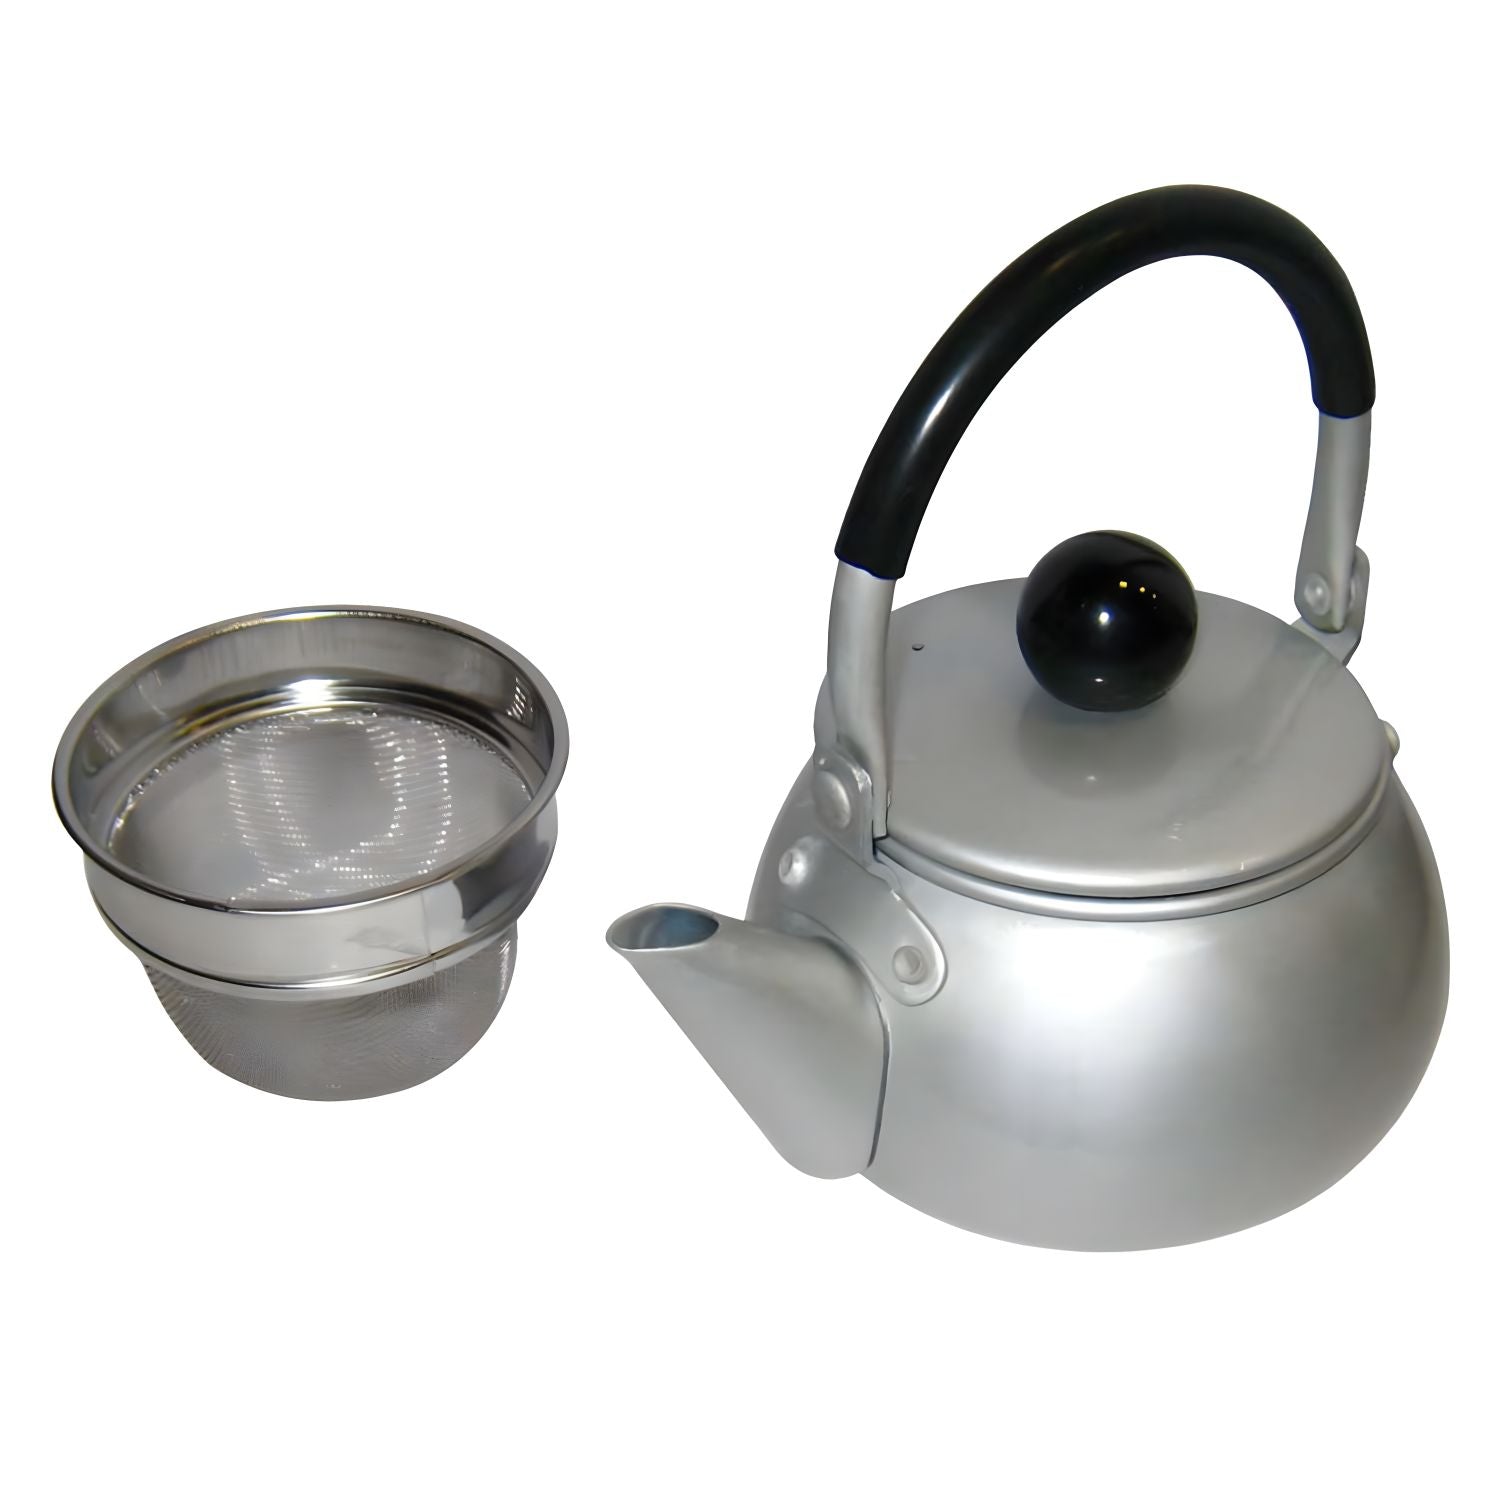 Premium Silver Aluminum Kyusu Teapot by Maekawa Kinzoku - Enhance Your Tea Experience